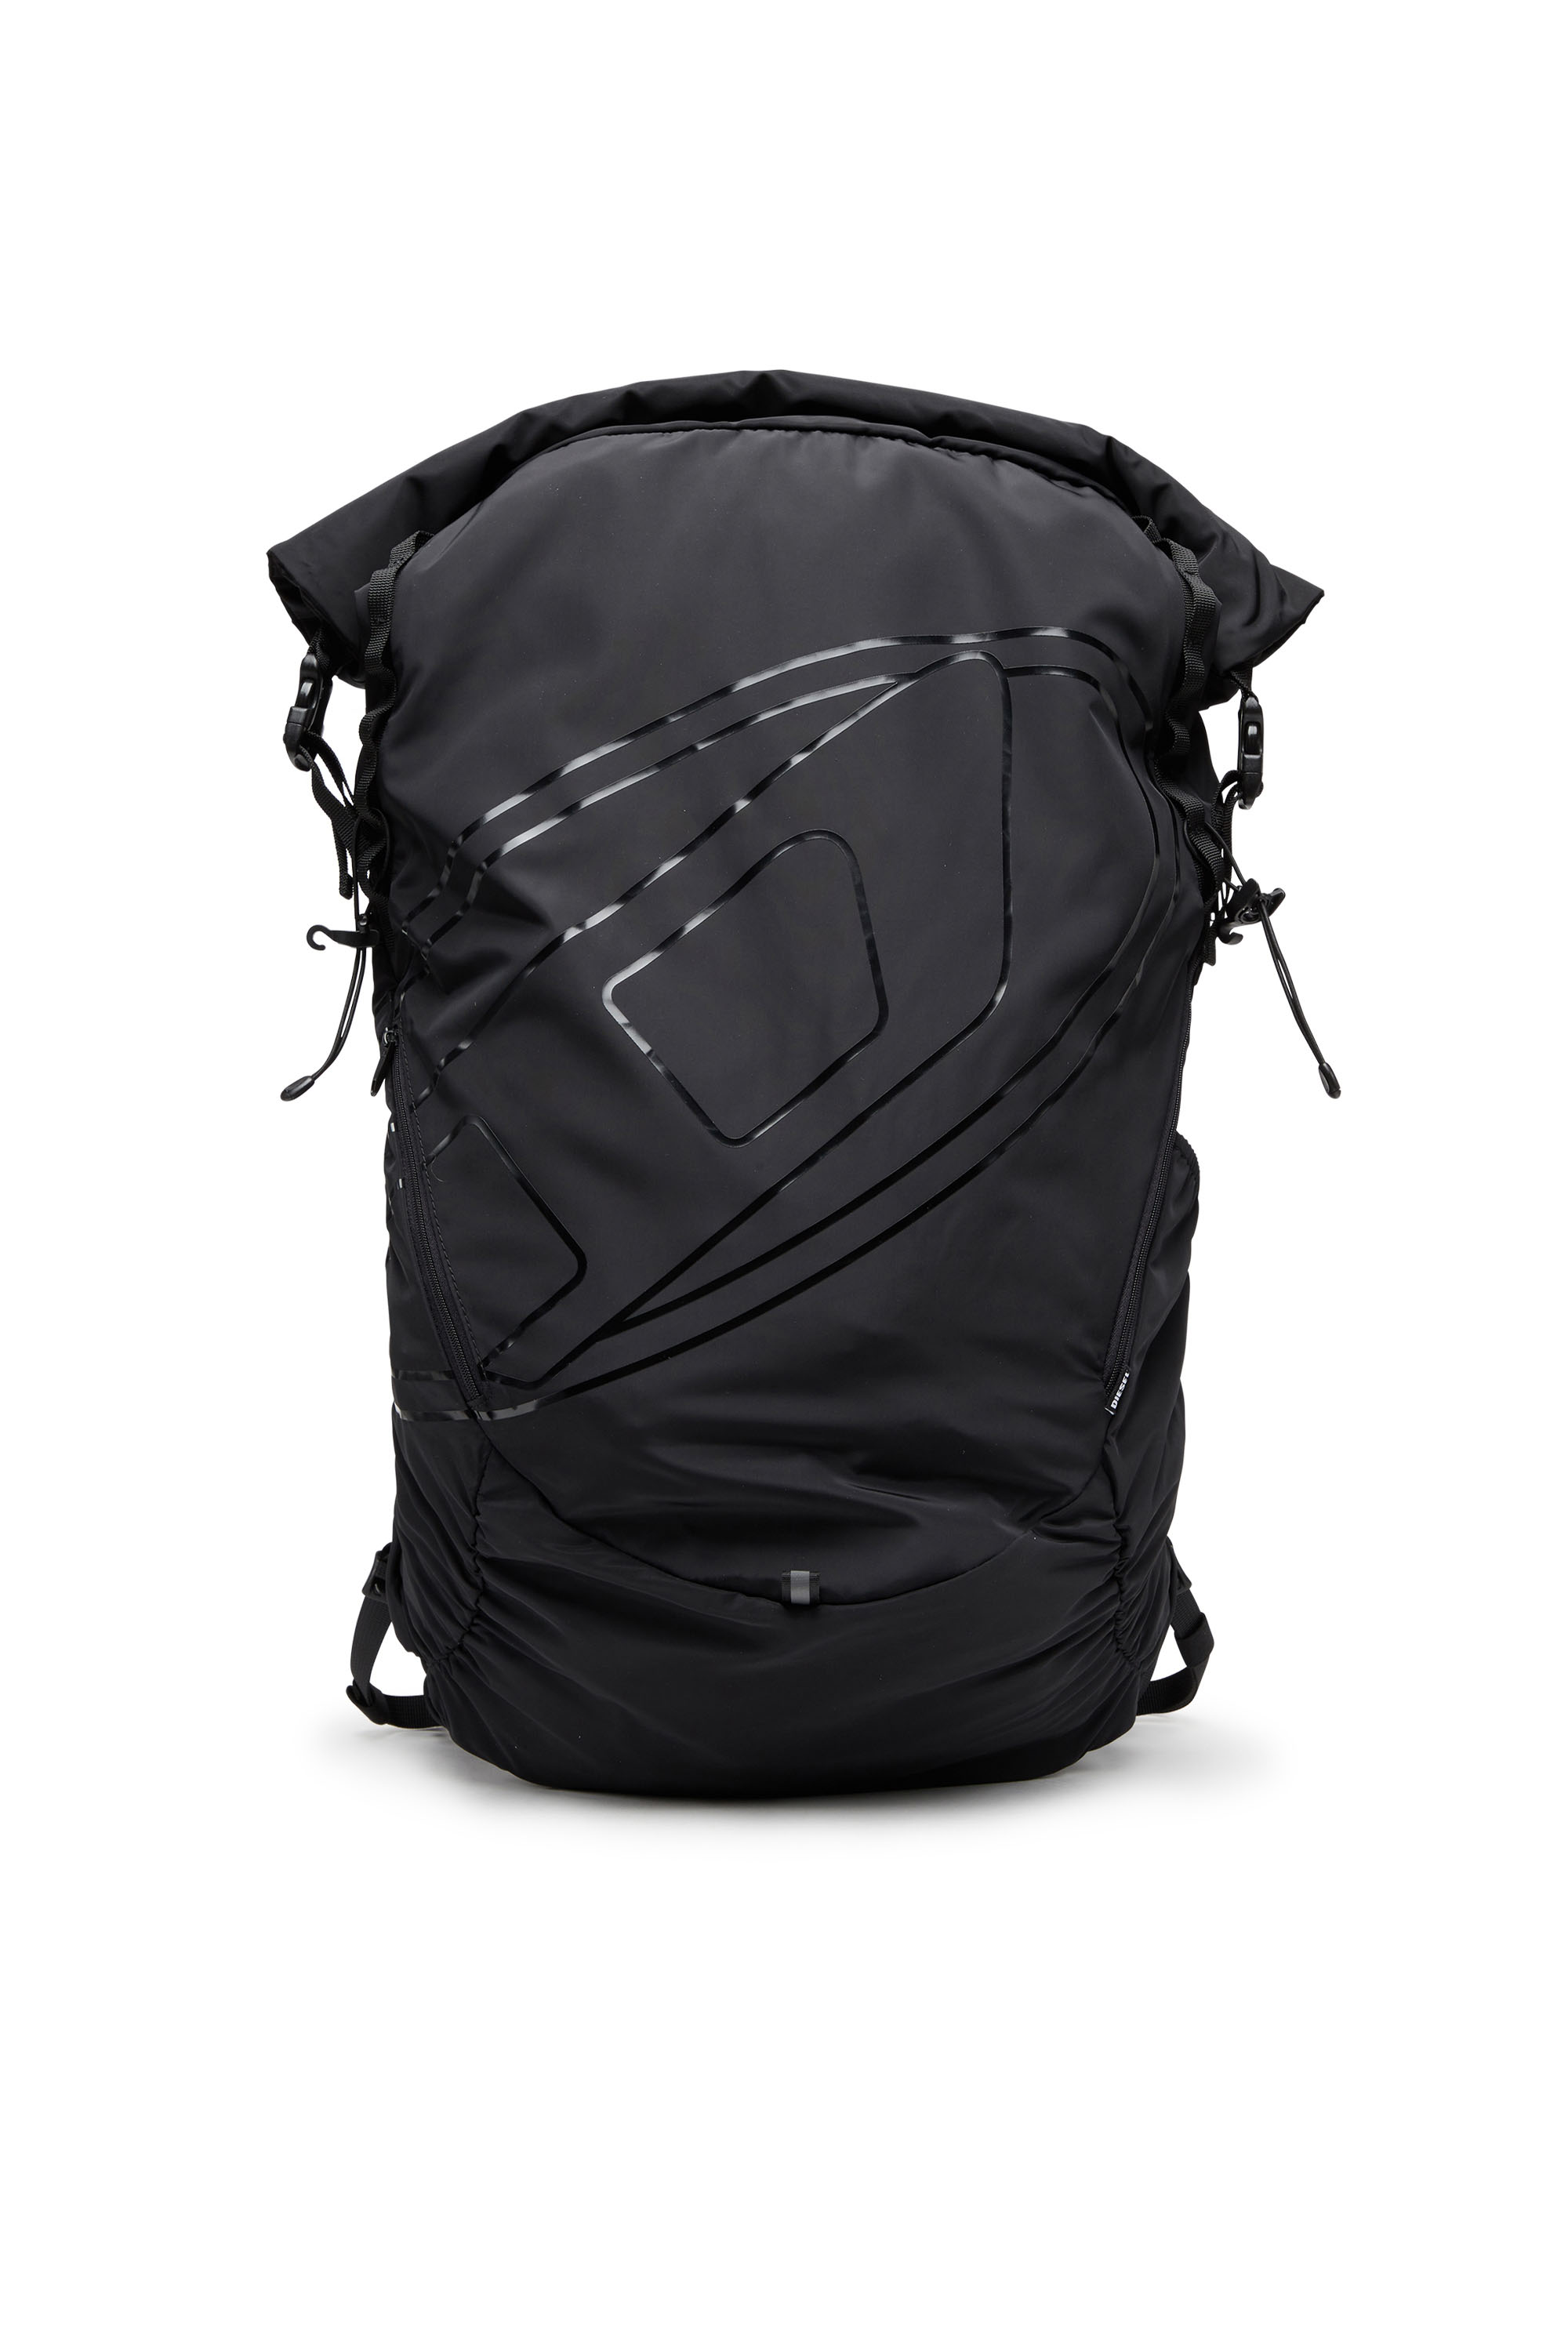 Diesel - Drape Backpack - Mochila de nailon con cierre enrollable - Mochilas - Hombre - Negro